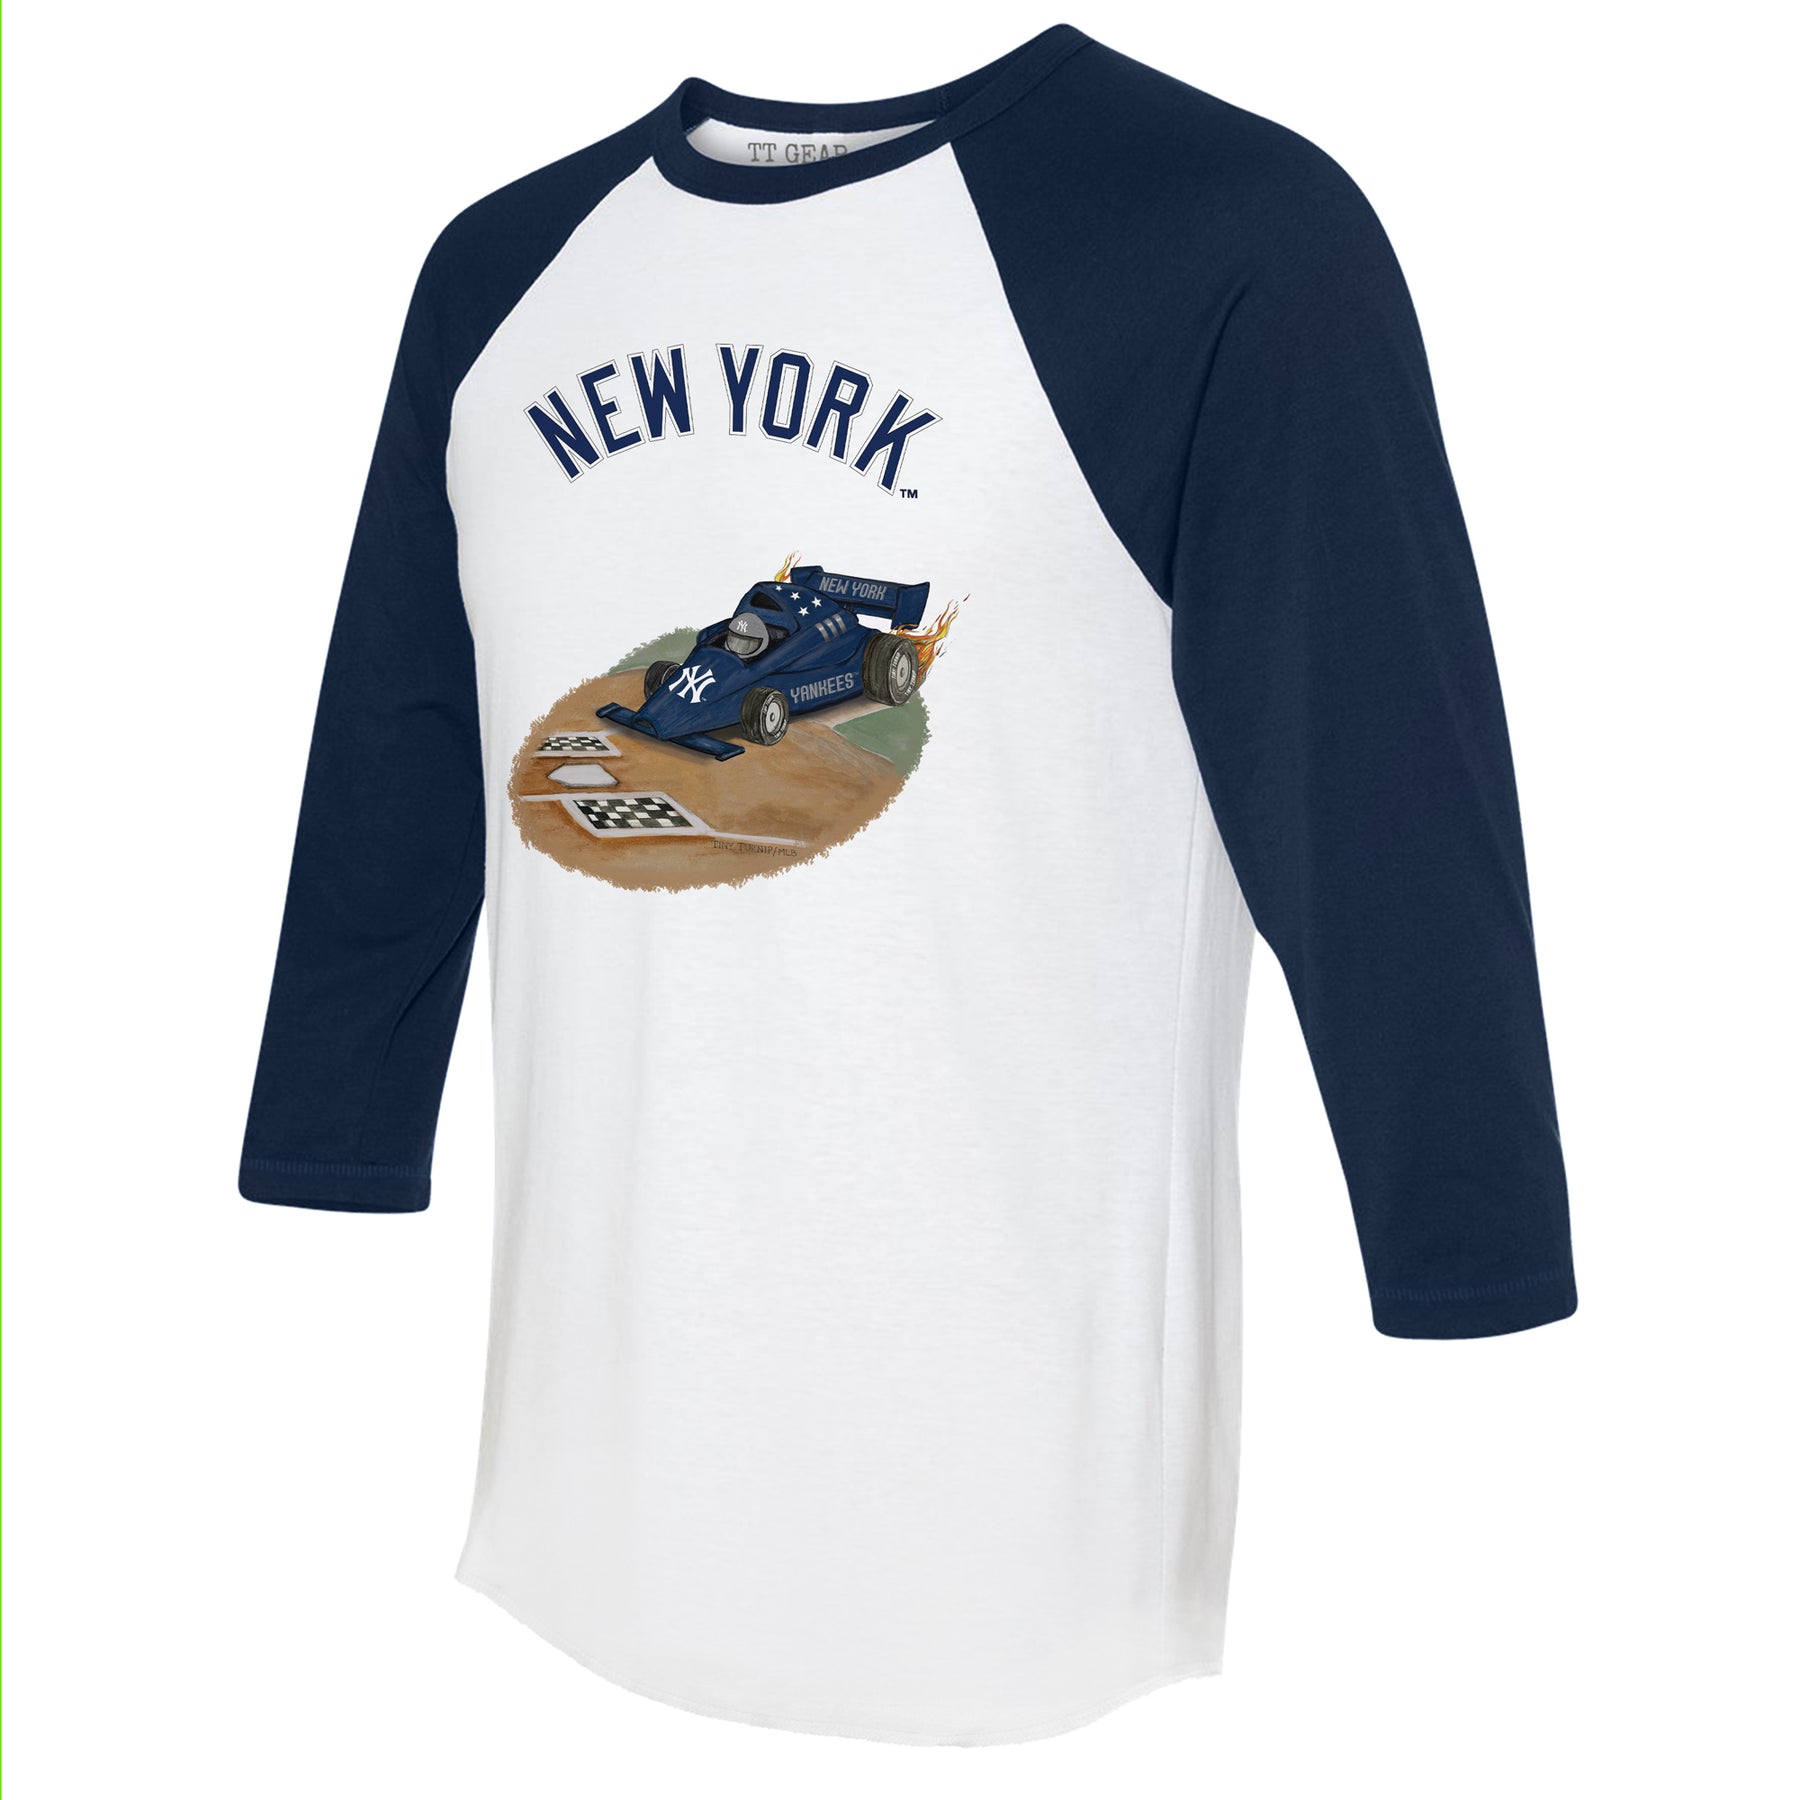 New York Yankees Race Car 3/4 Navy Blue Sleeve Raglan